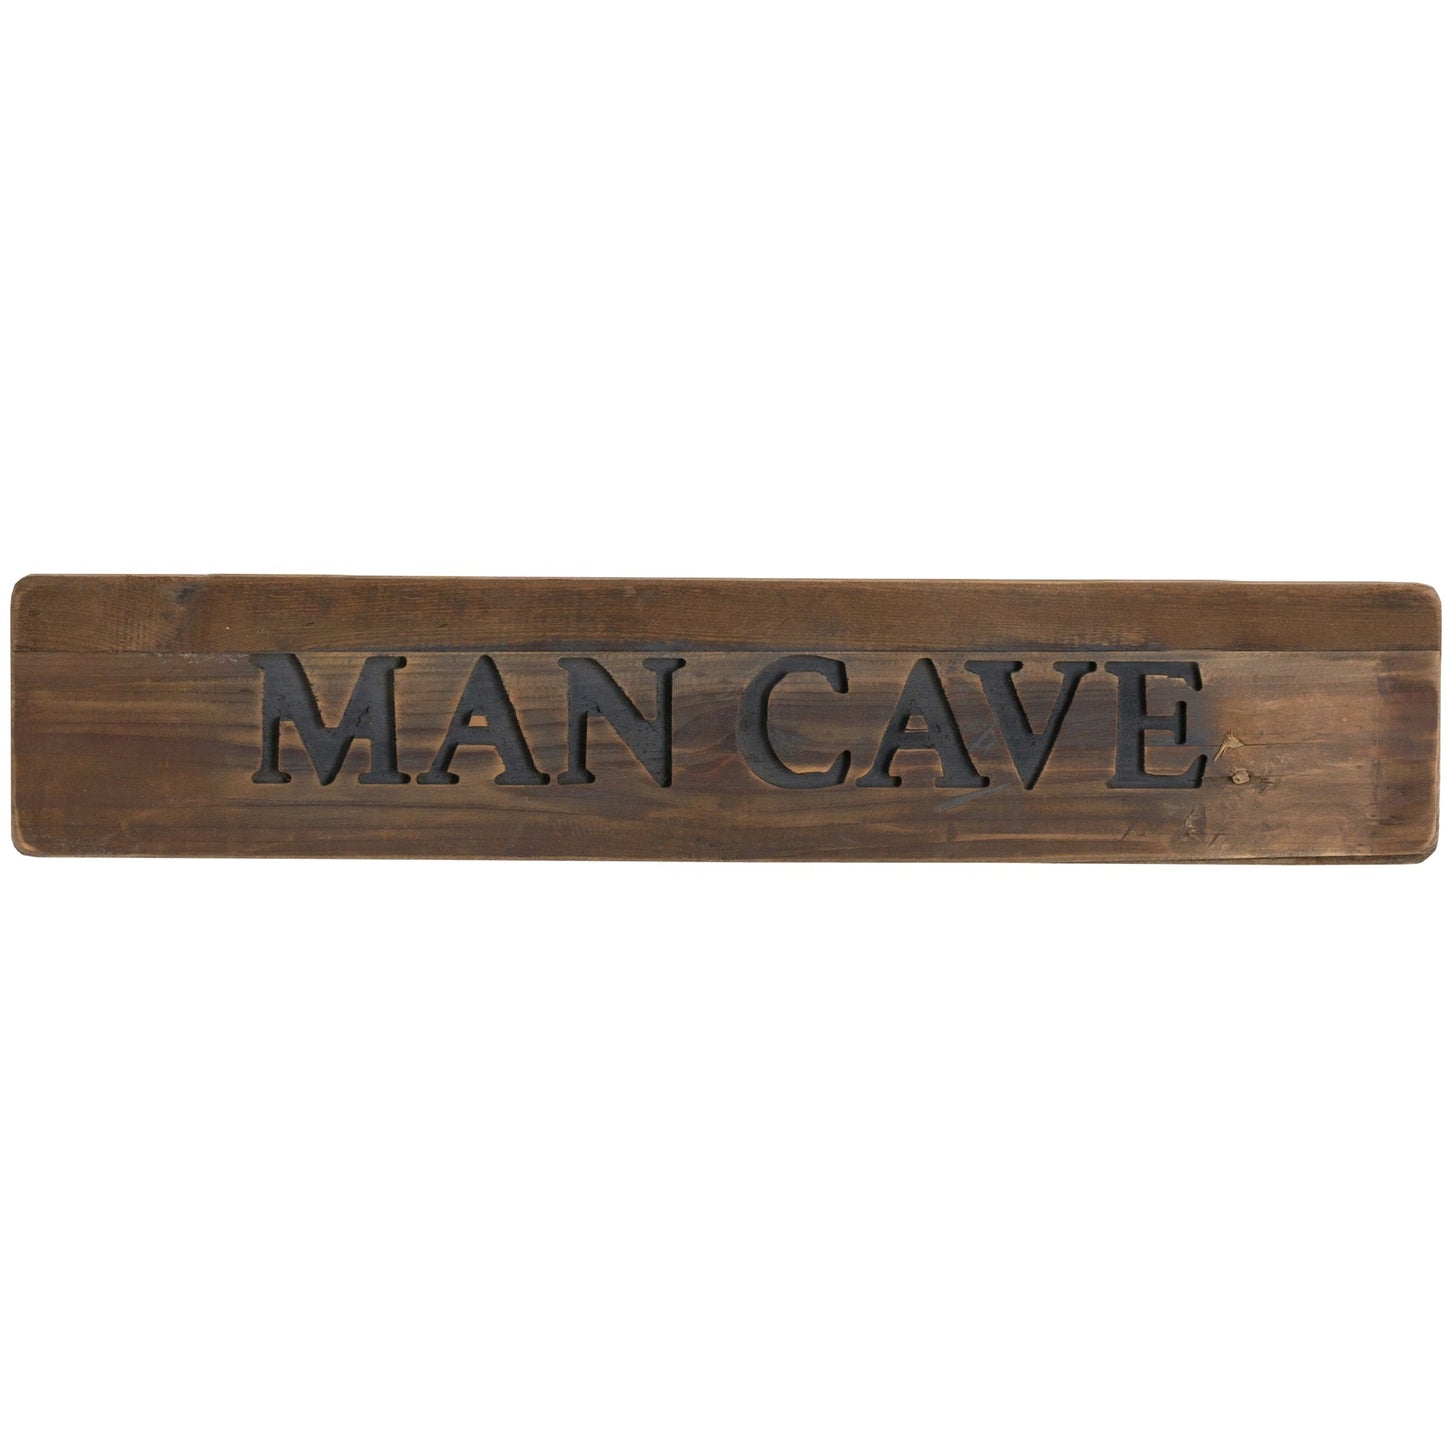 Man Cave Rustic Wooden Message Plaque